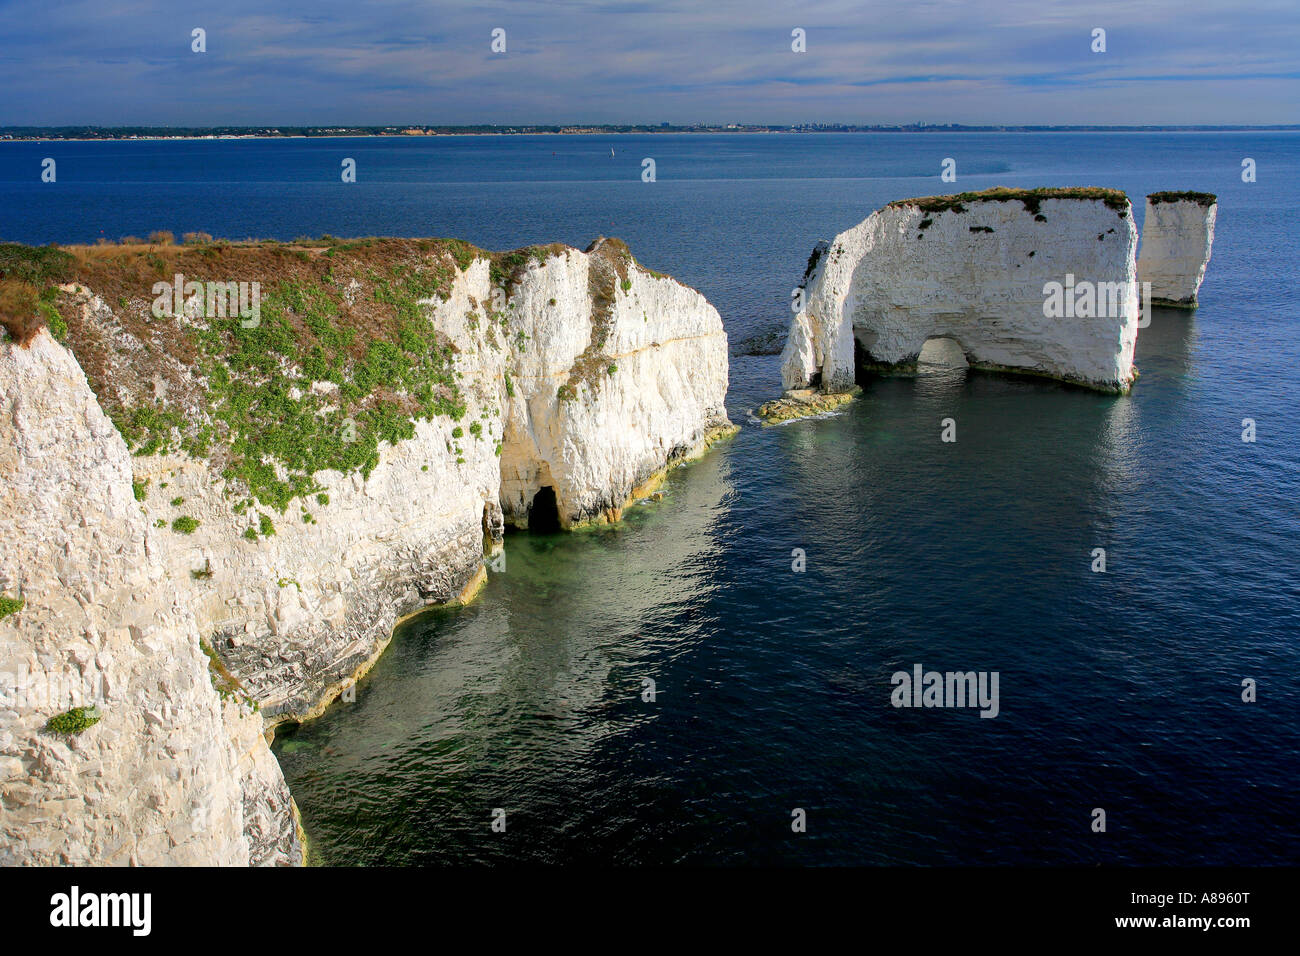 Mañana de Verano Old Harry Rocks Poole Bay costa Jurásica Dorset, Inglaterra Gran Bretaña UK Foto de stock